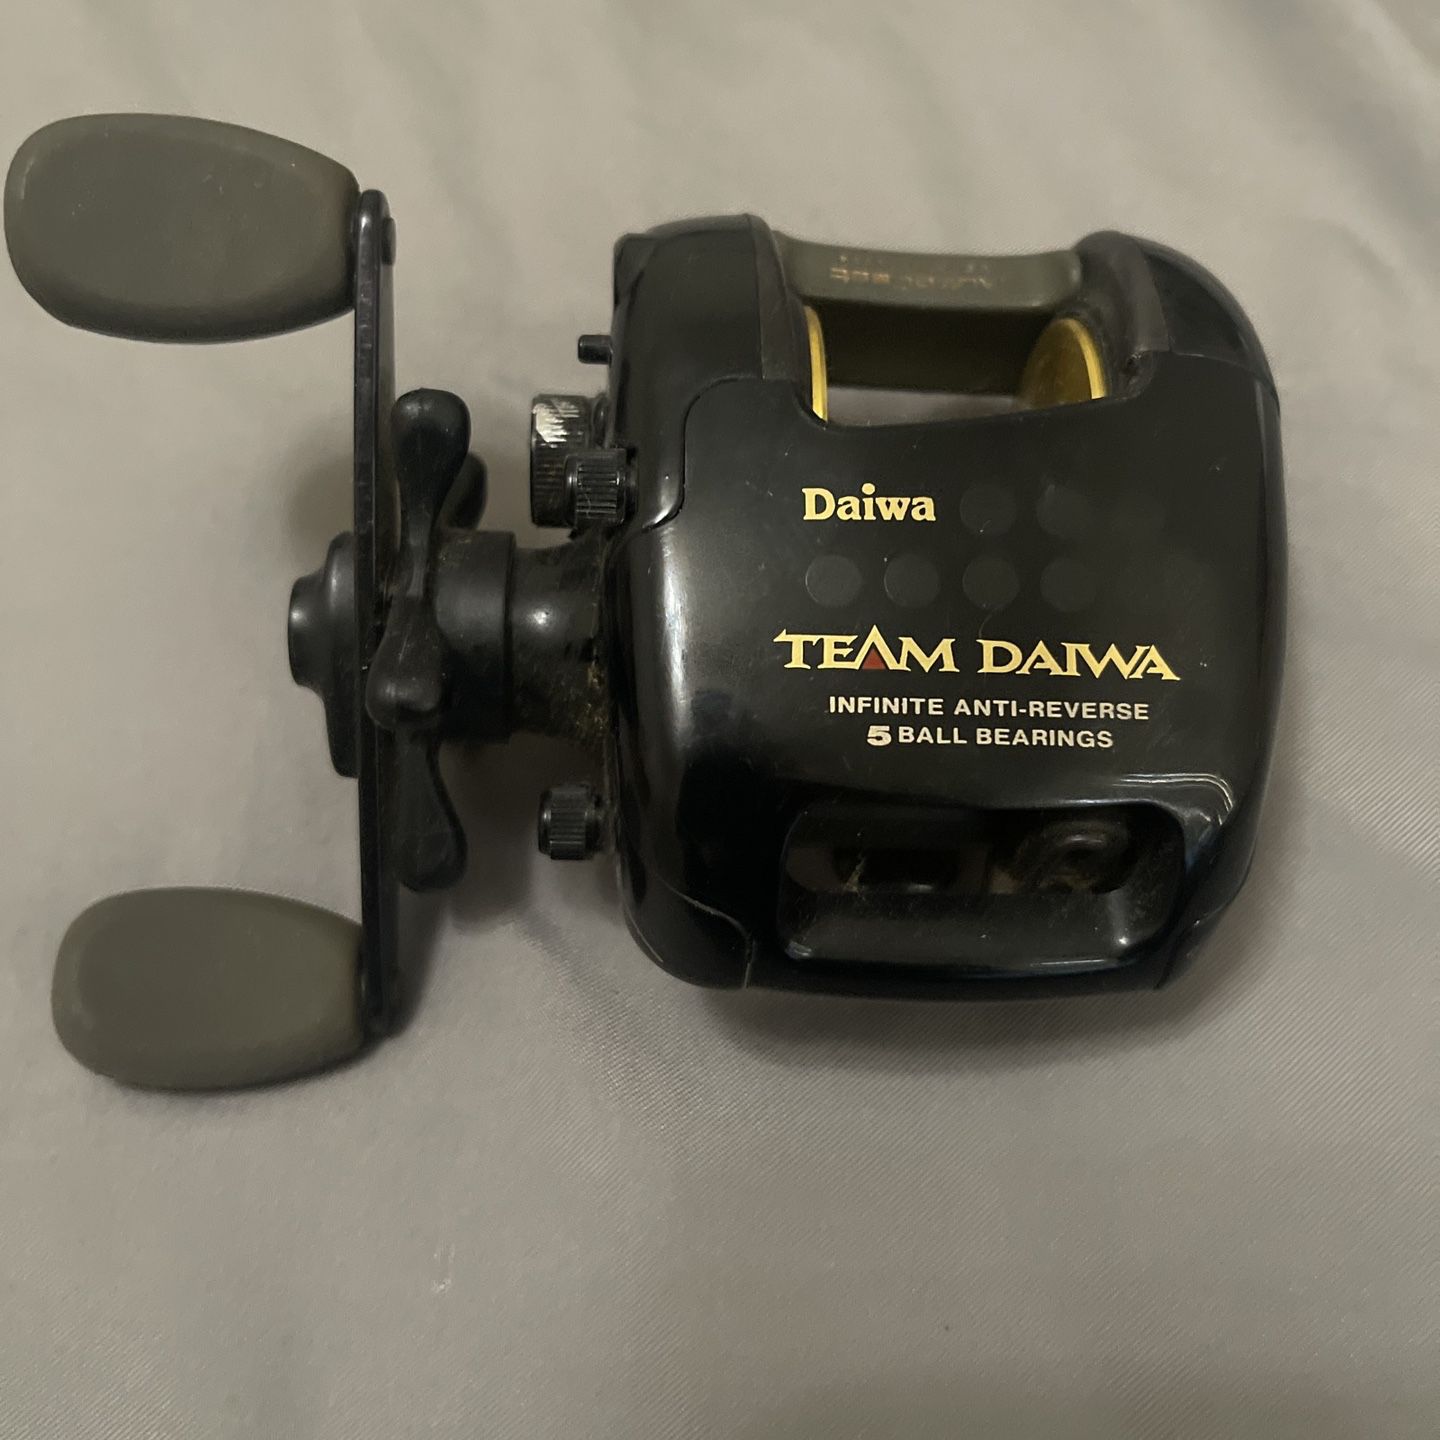 Daiwa TD2Hi Team Daiwa Fishing Reel for Sale in Las Vegas, NV - OfferUp